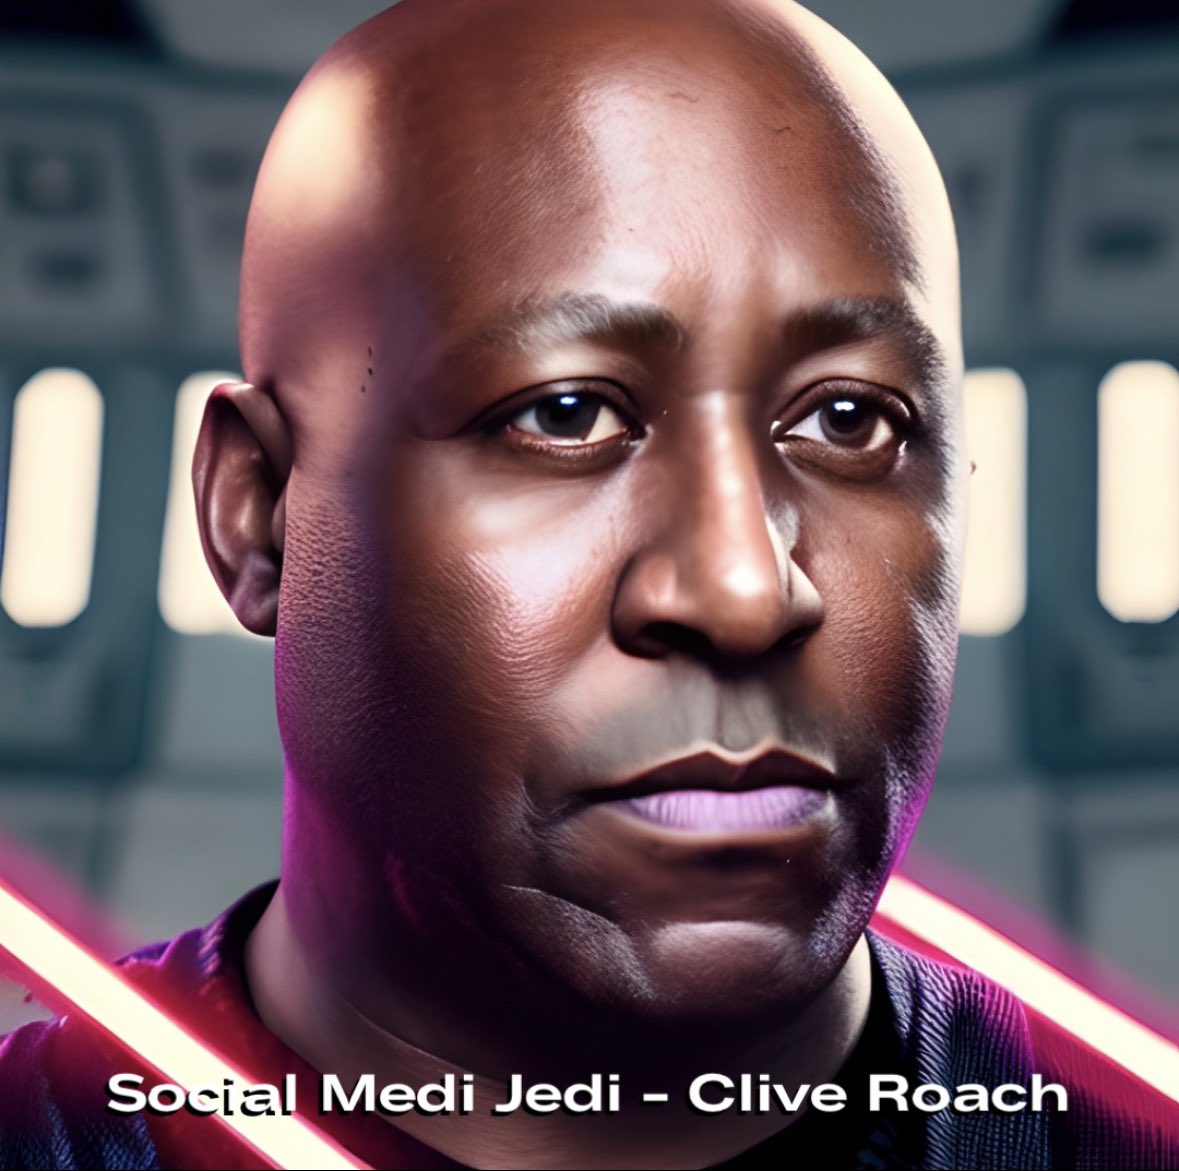 “Grab your lightsaber and follow me Jedi. We have some posts to publish” - #starwars #lightsaber #socialmediajedi #socialmediamarketing #socialmedia